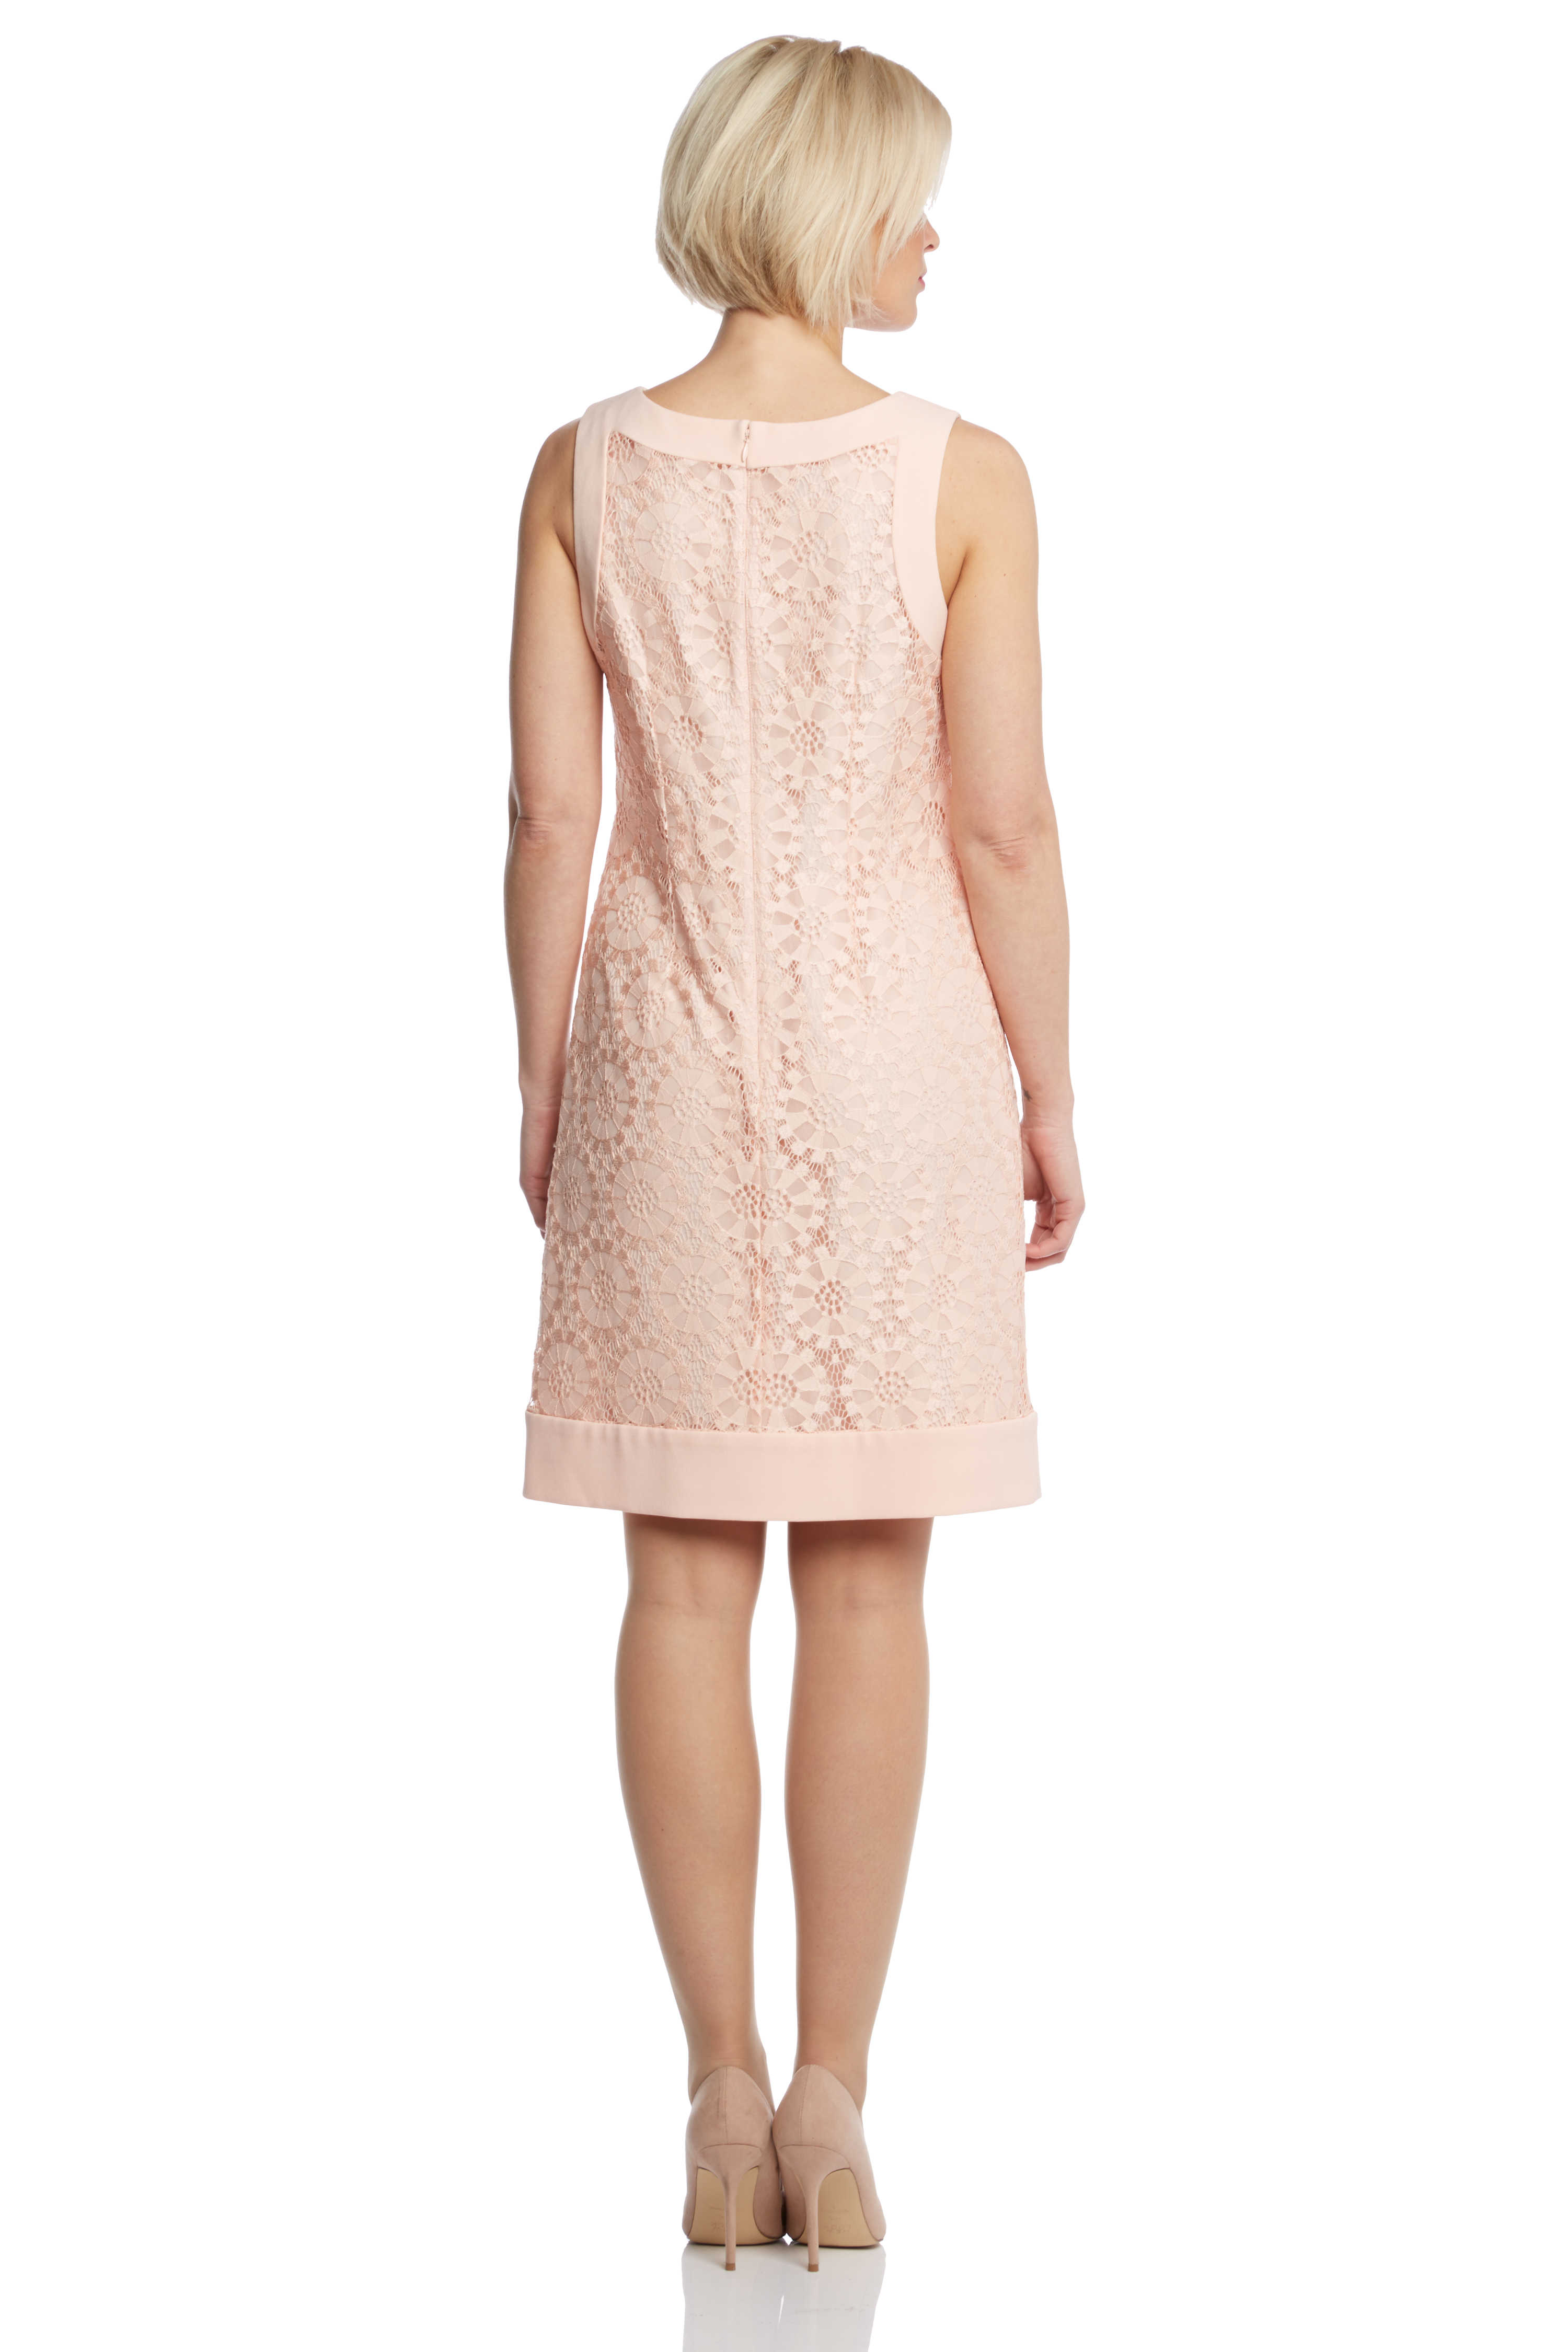 PINK Pastel Lace Shift Dress, Image 4 of 5